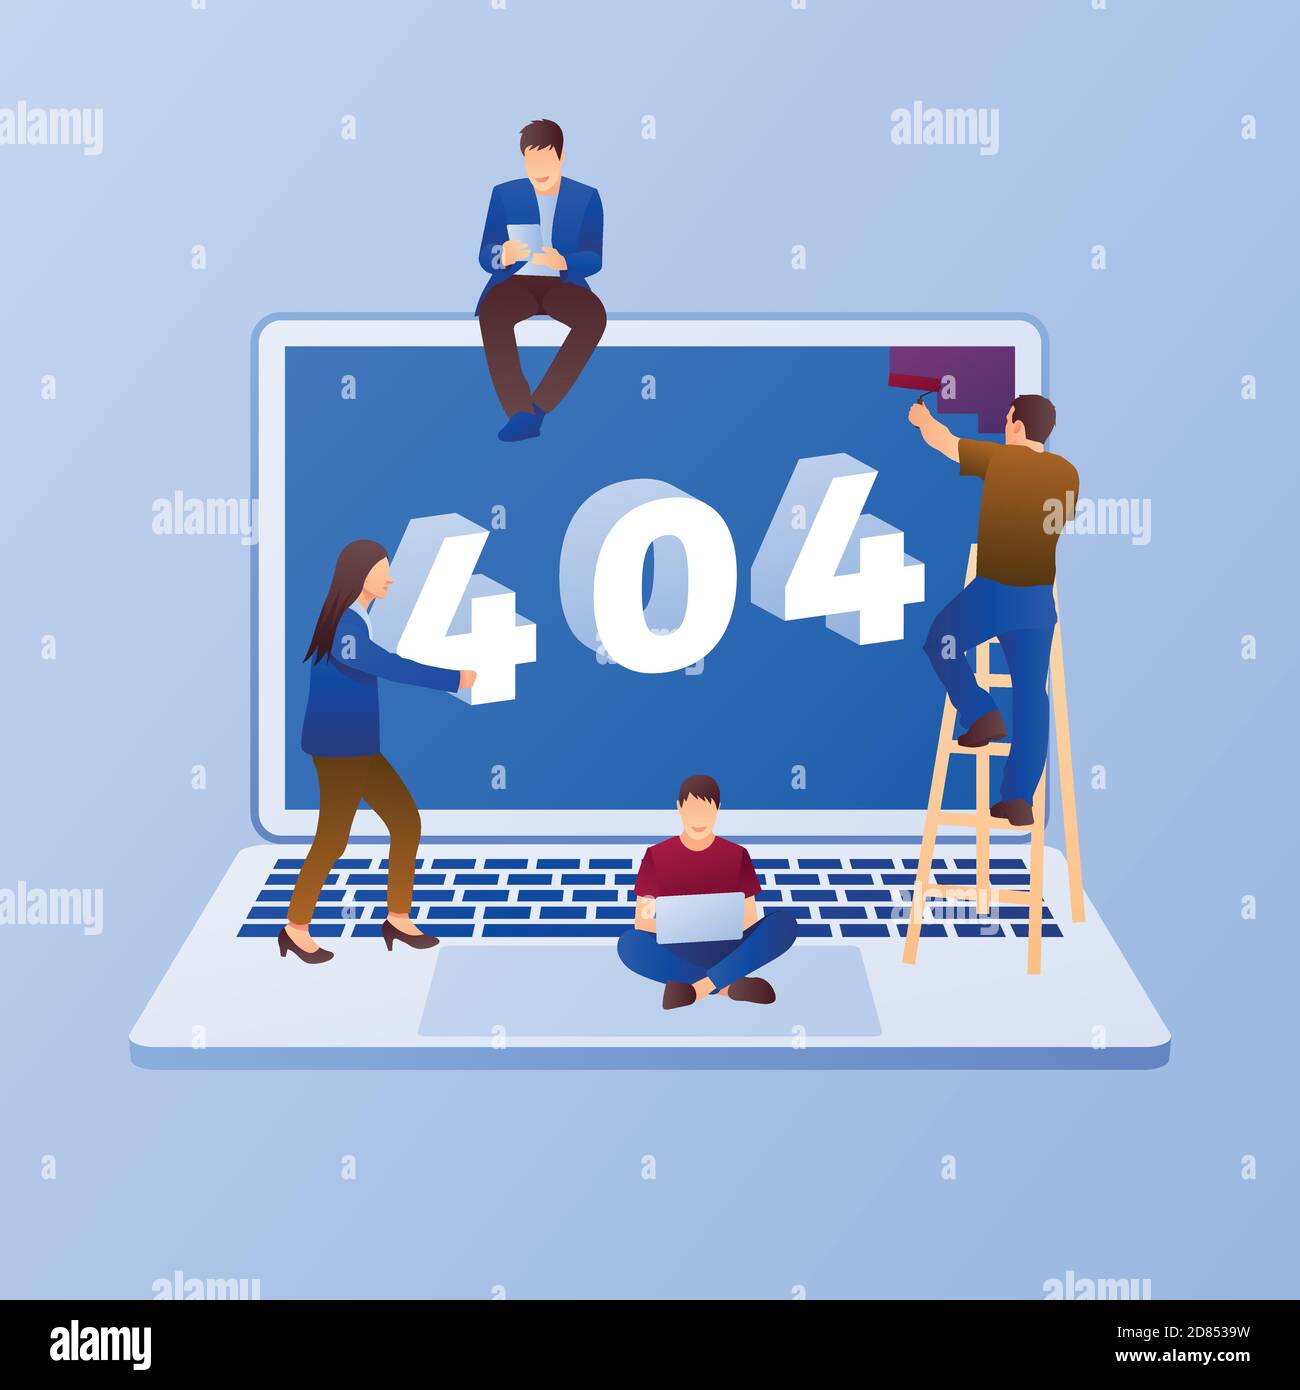 Fehler auf der Website 404. Social Media Marketing Konzept. Flaches Design mit Farbverlauf. Moderner Vektor. Stock Vektor